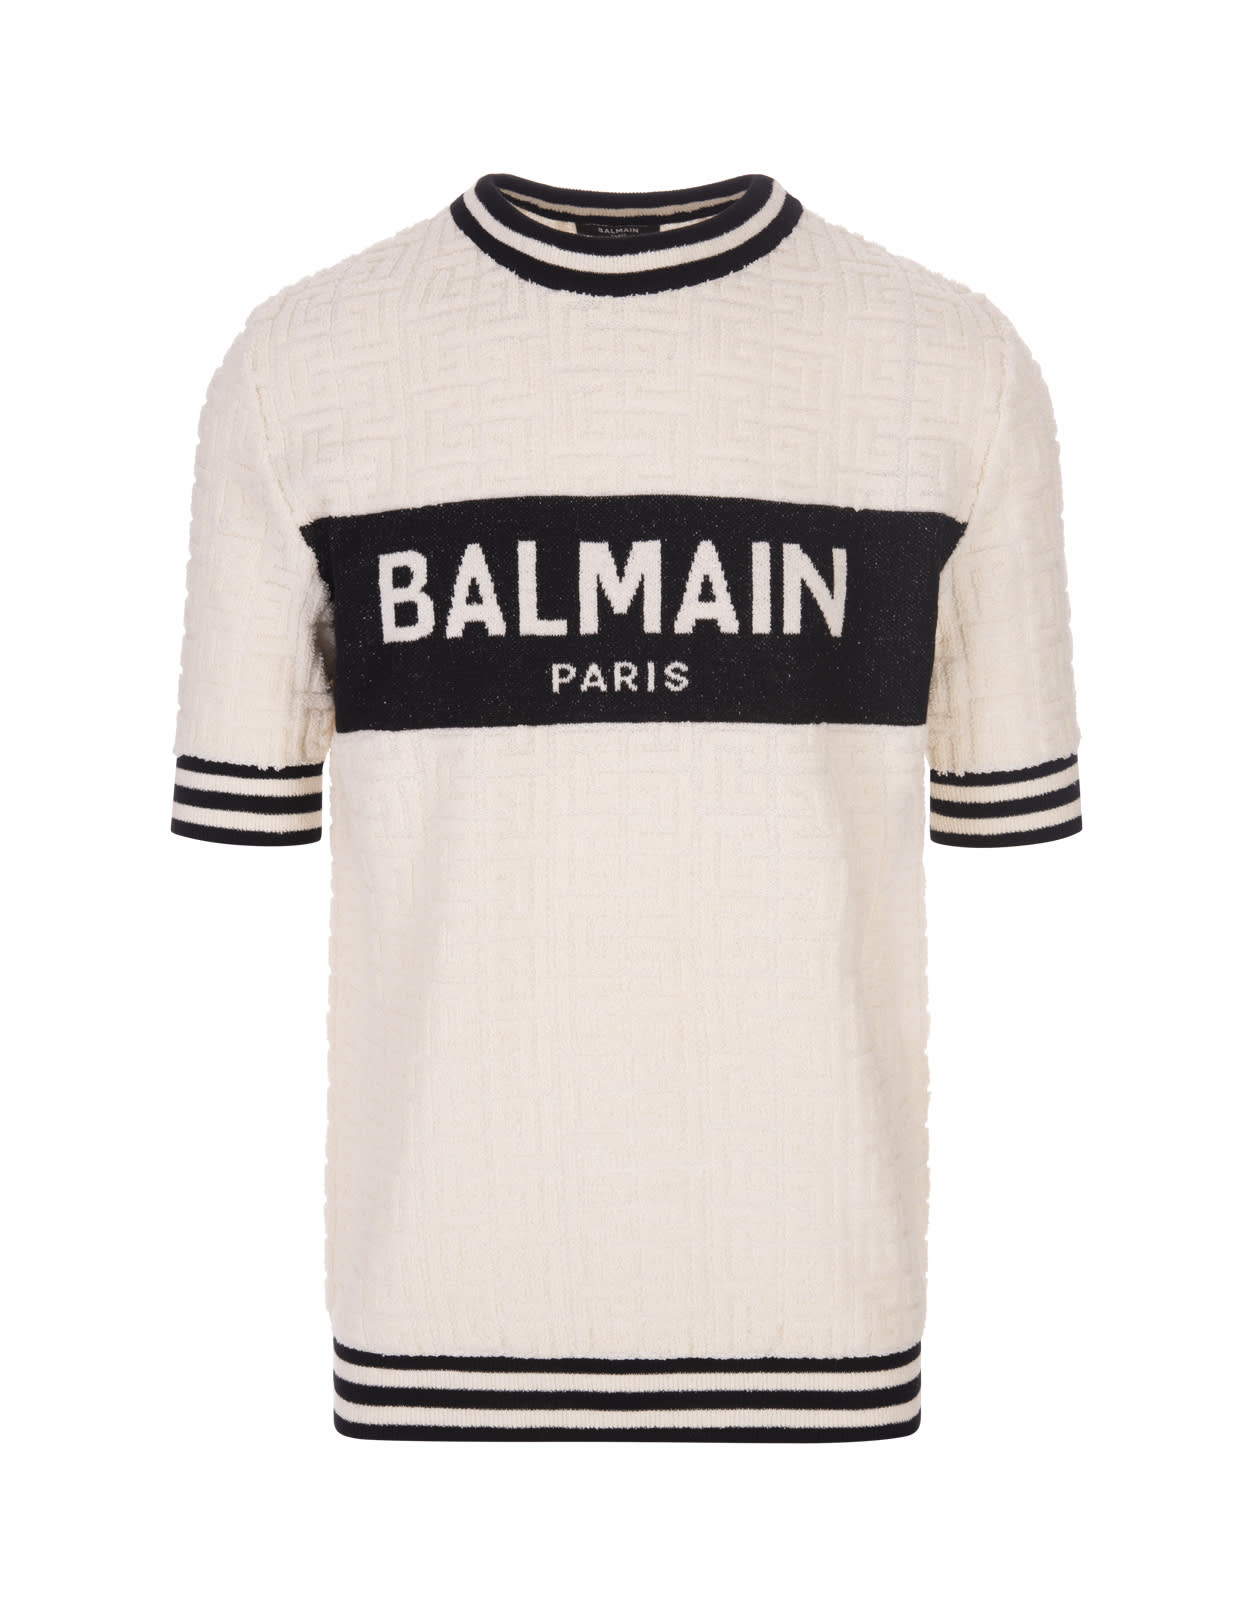 BALMAIN BALMAIN T-SHIRT IN WHITE COTTON TERRY